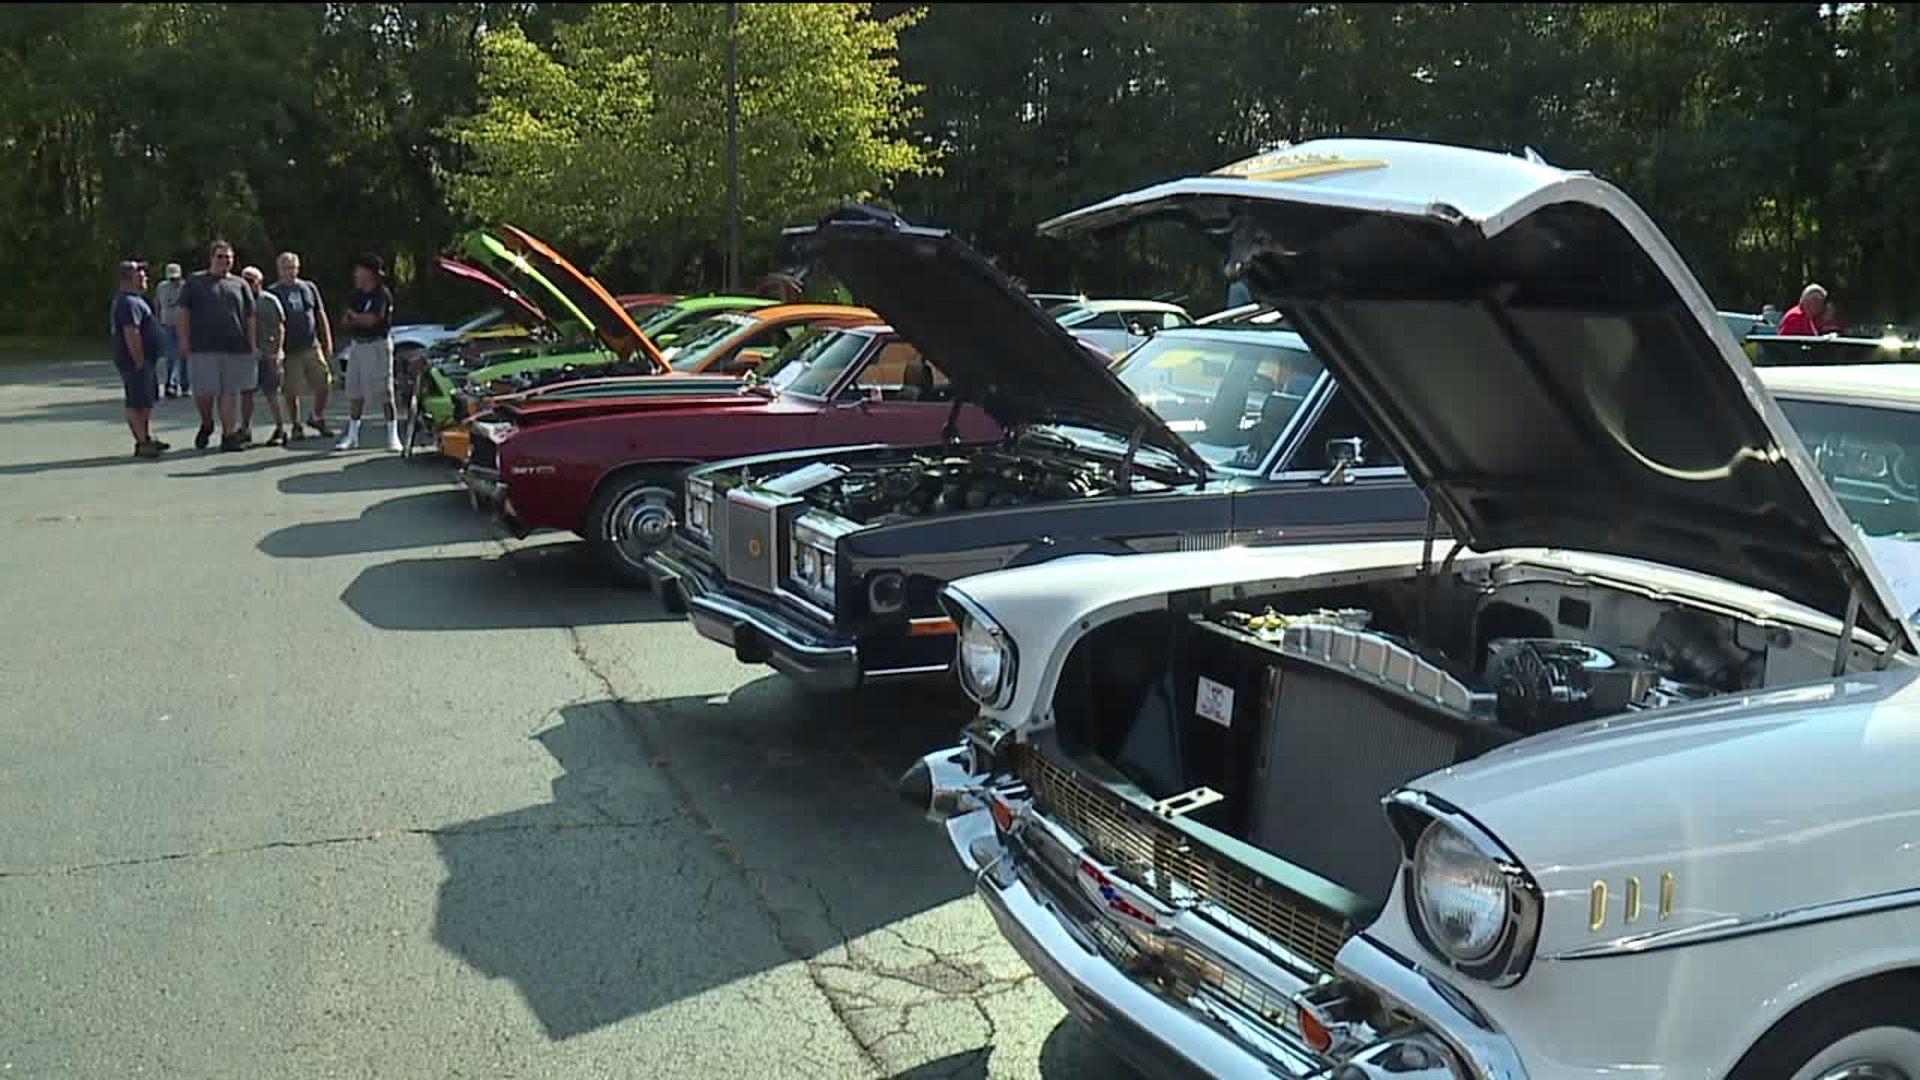 Car Show Benefits Nursing Home in Carbondale